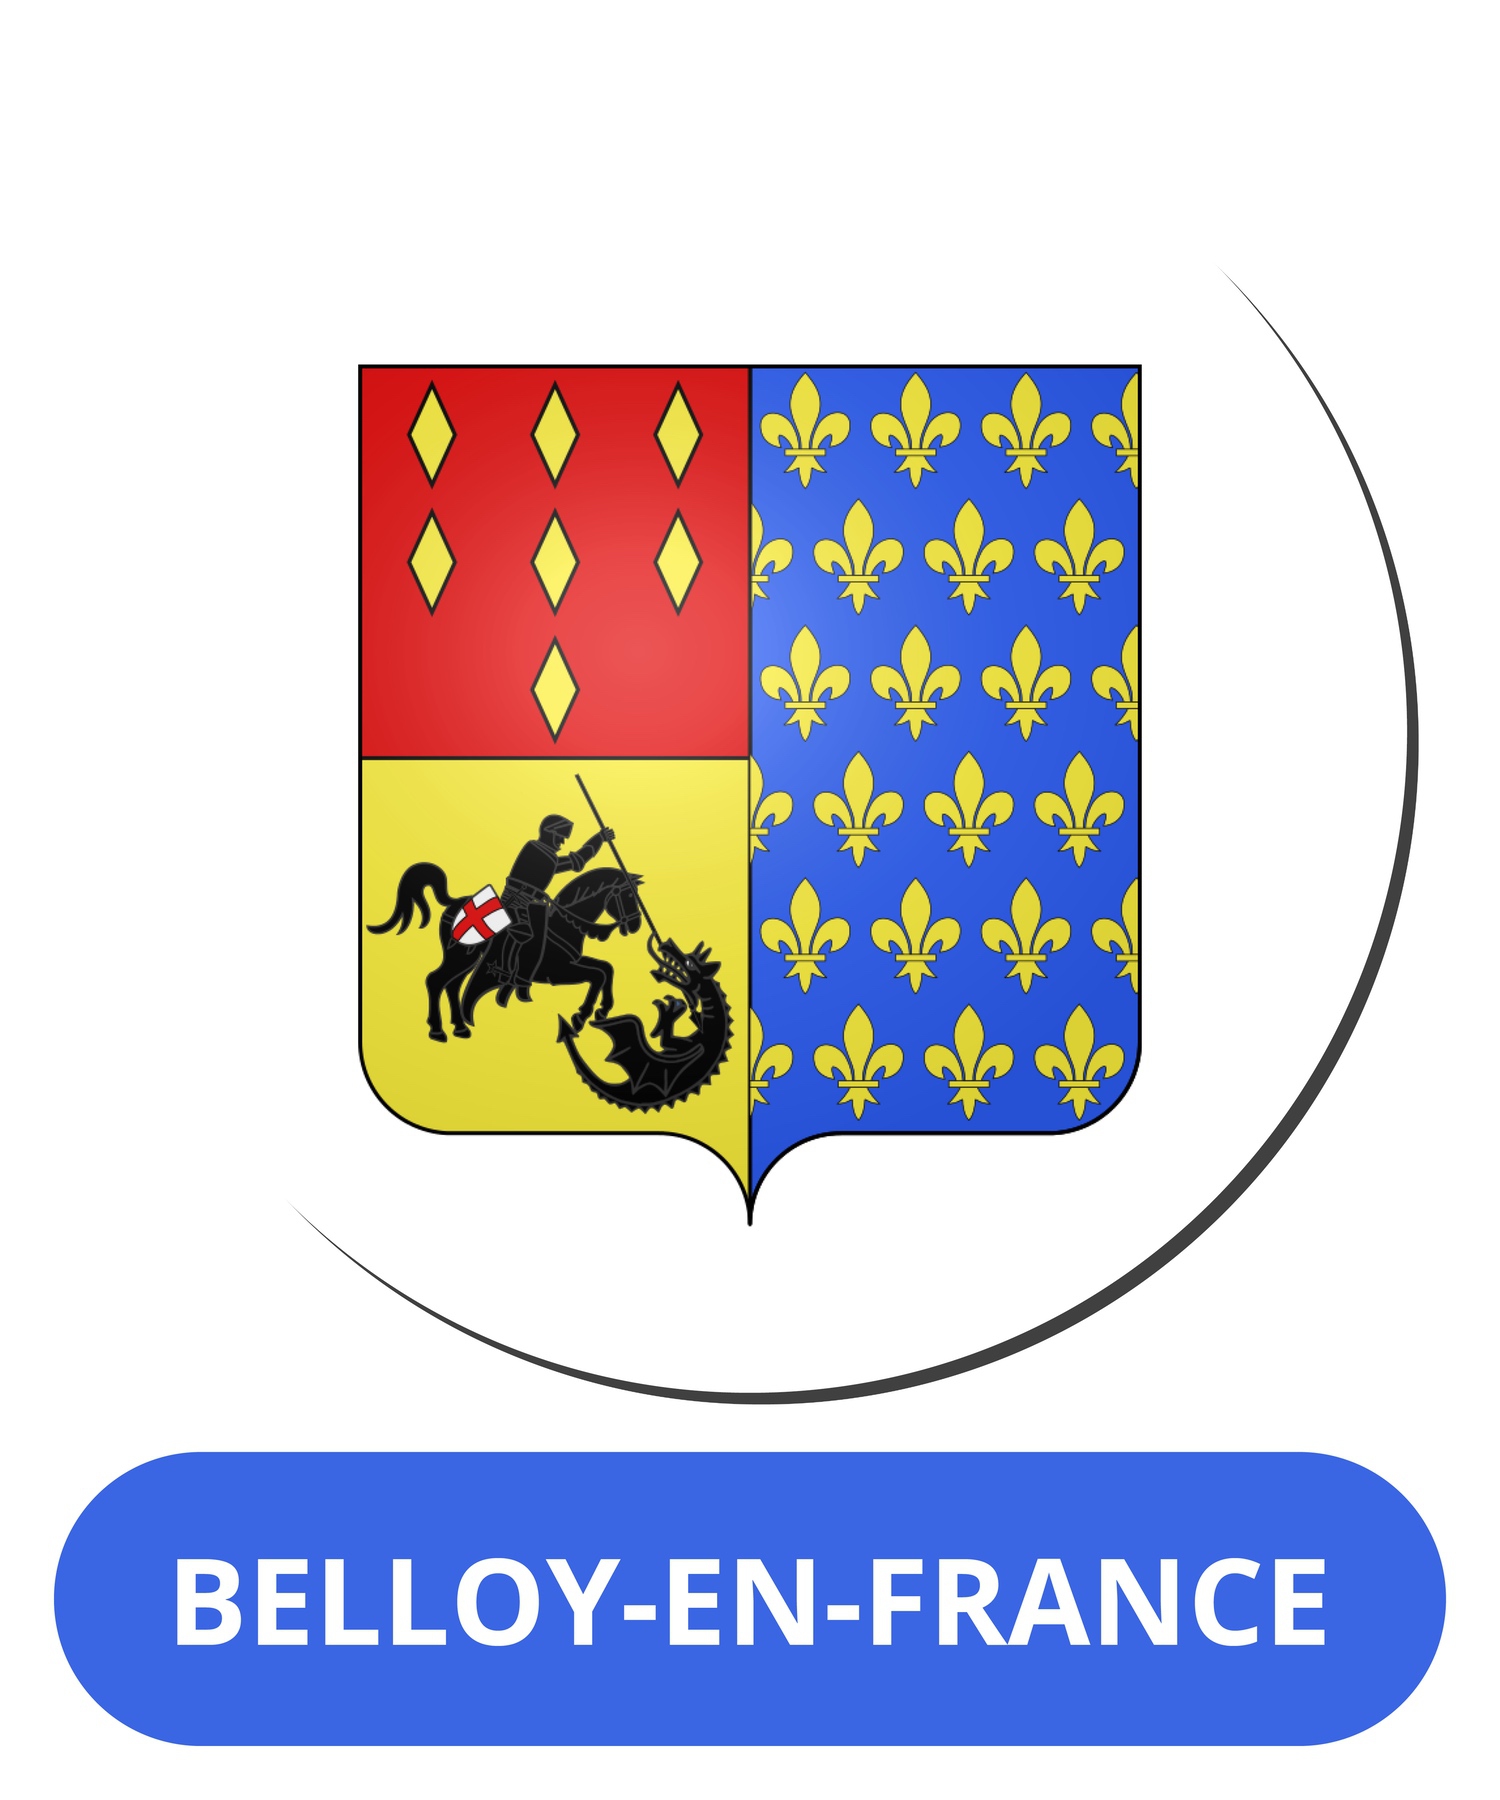 Belloy-en-France